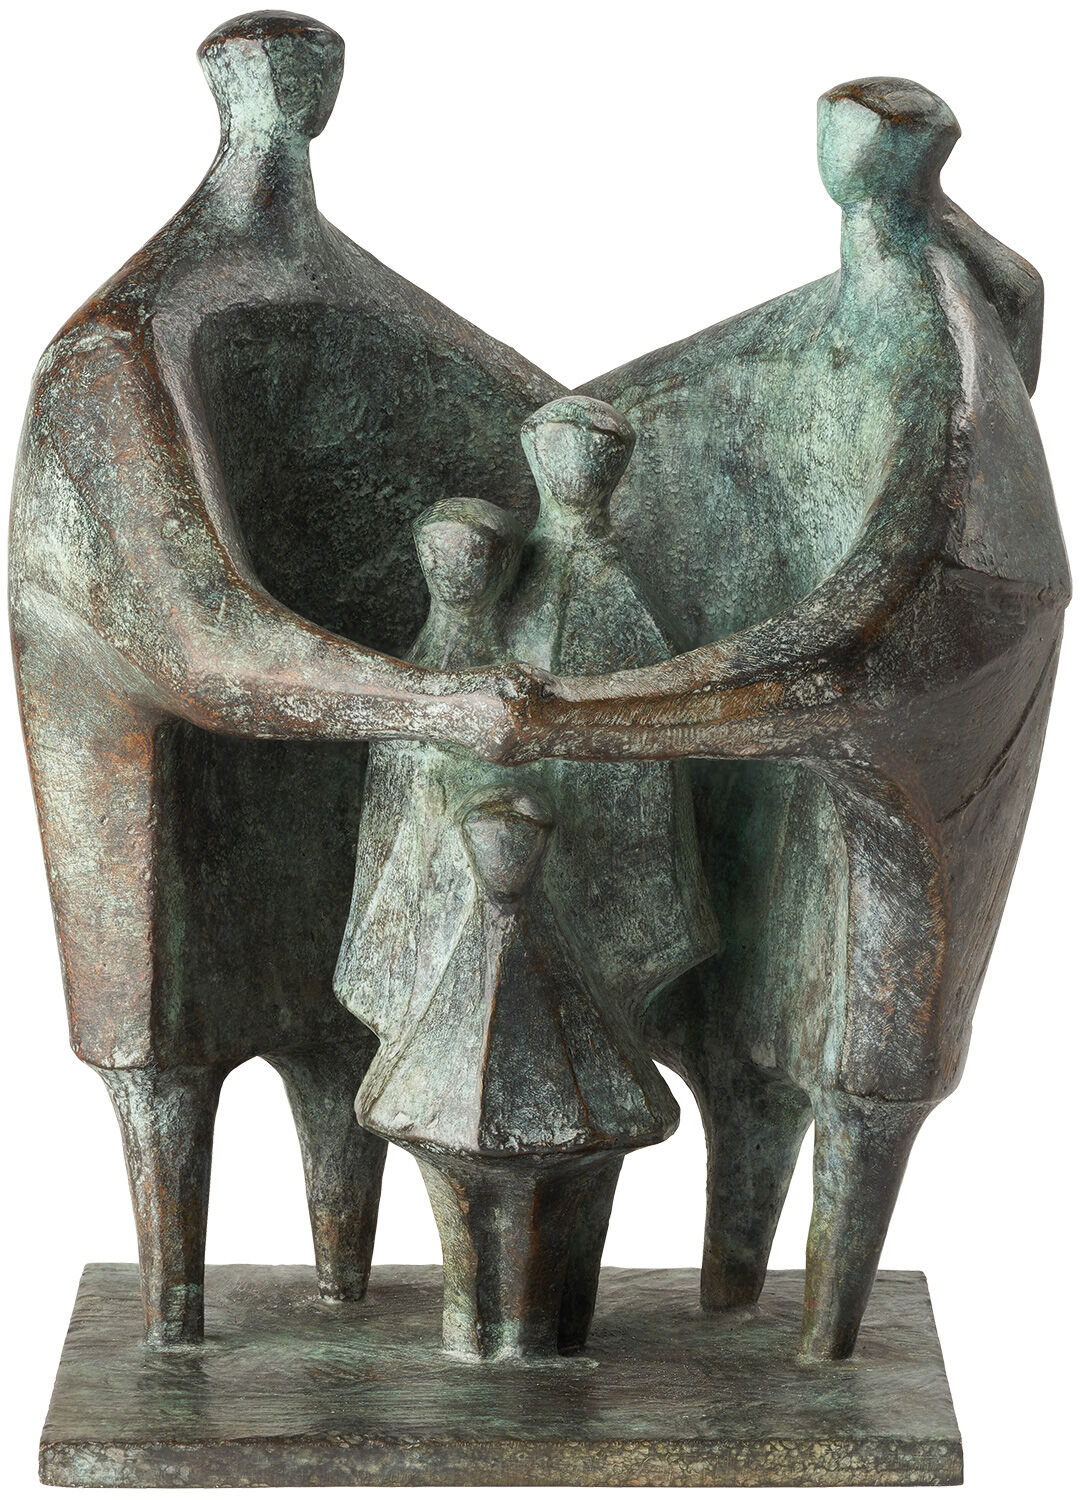 Sculpture "Family", bronze by Gerhard Brandes